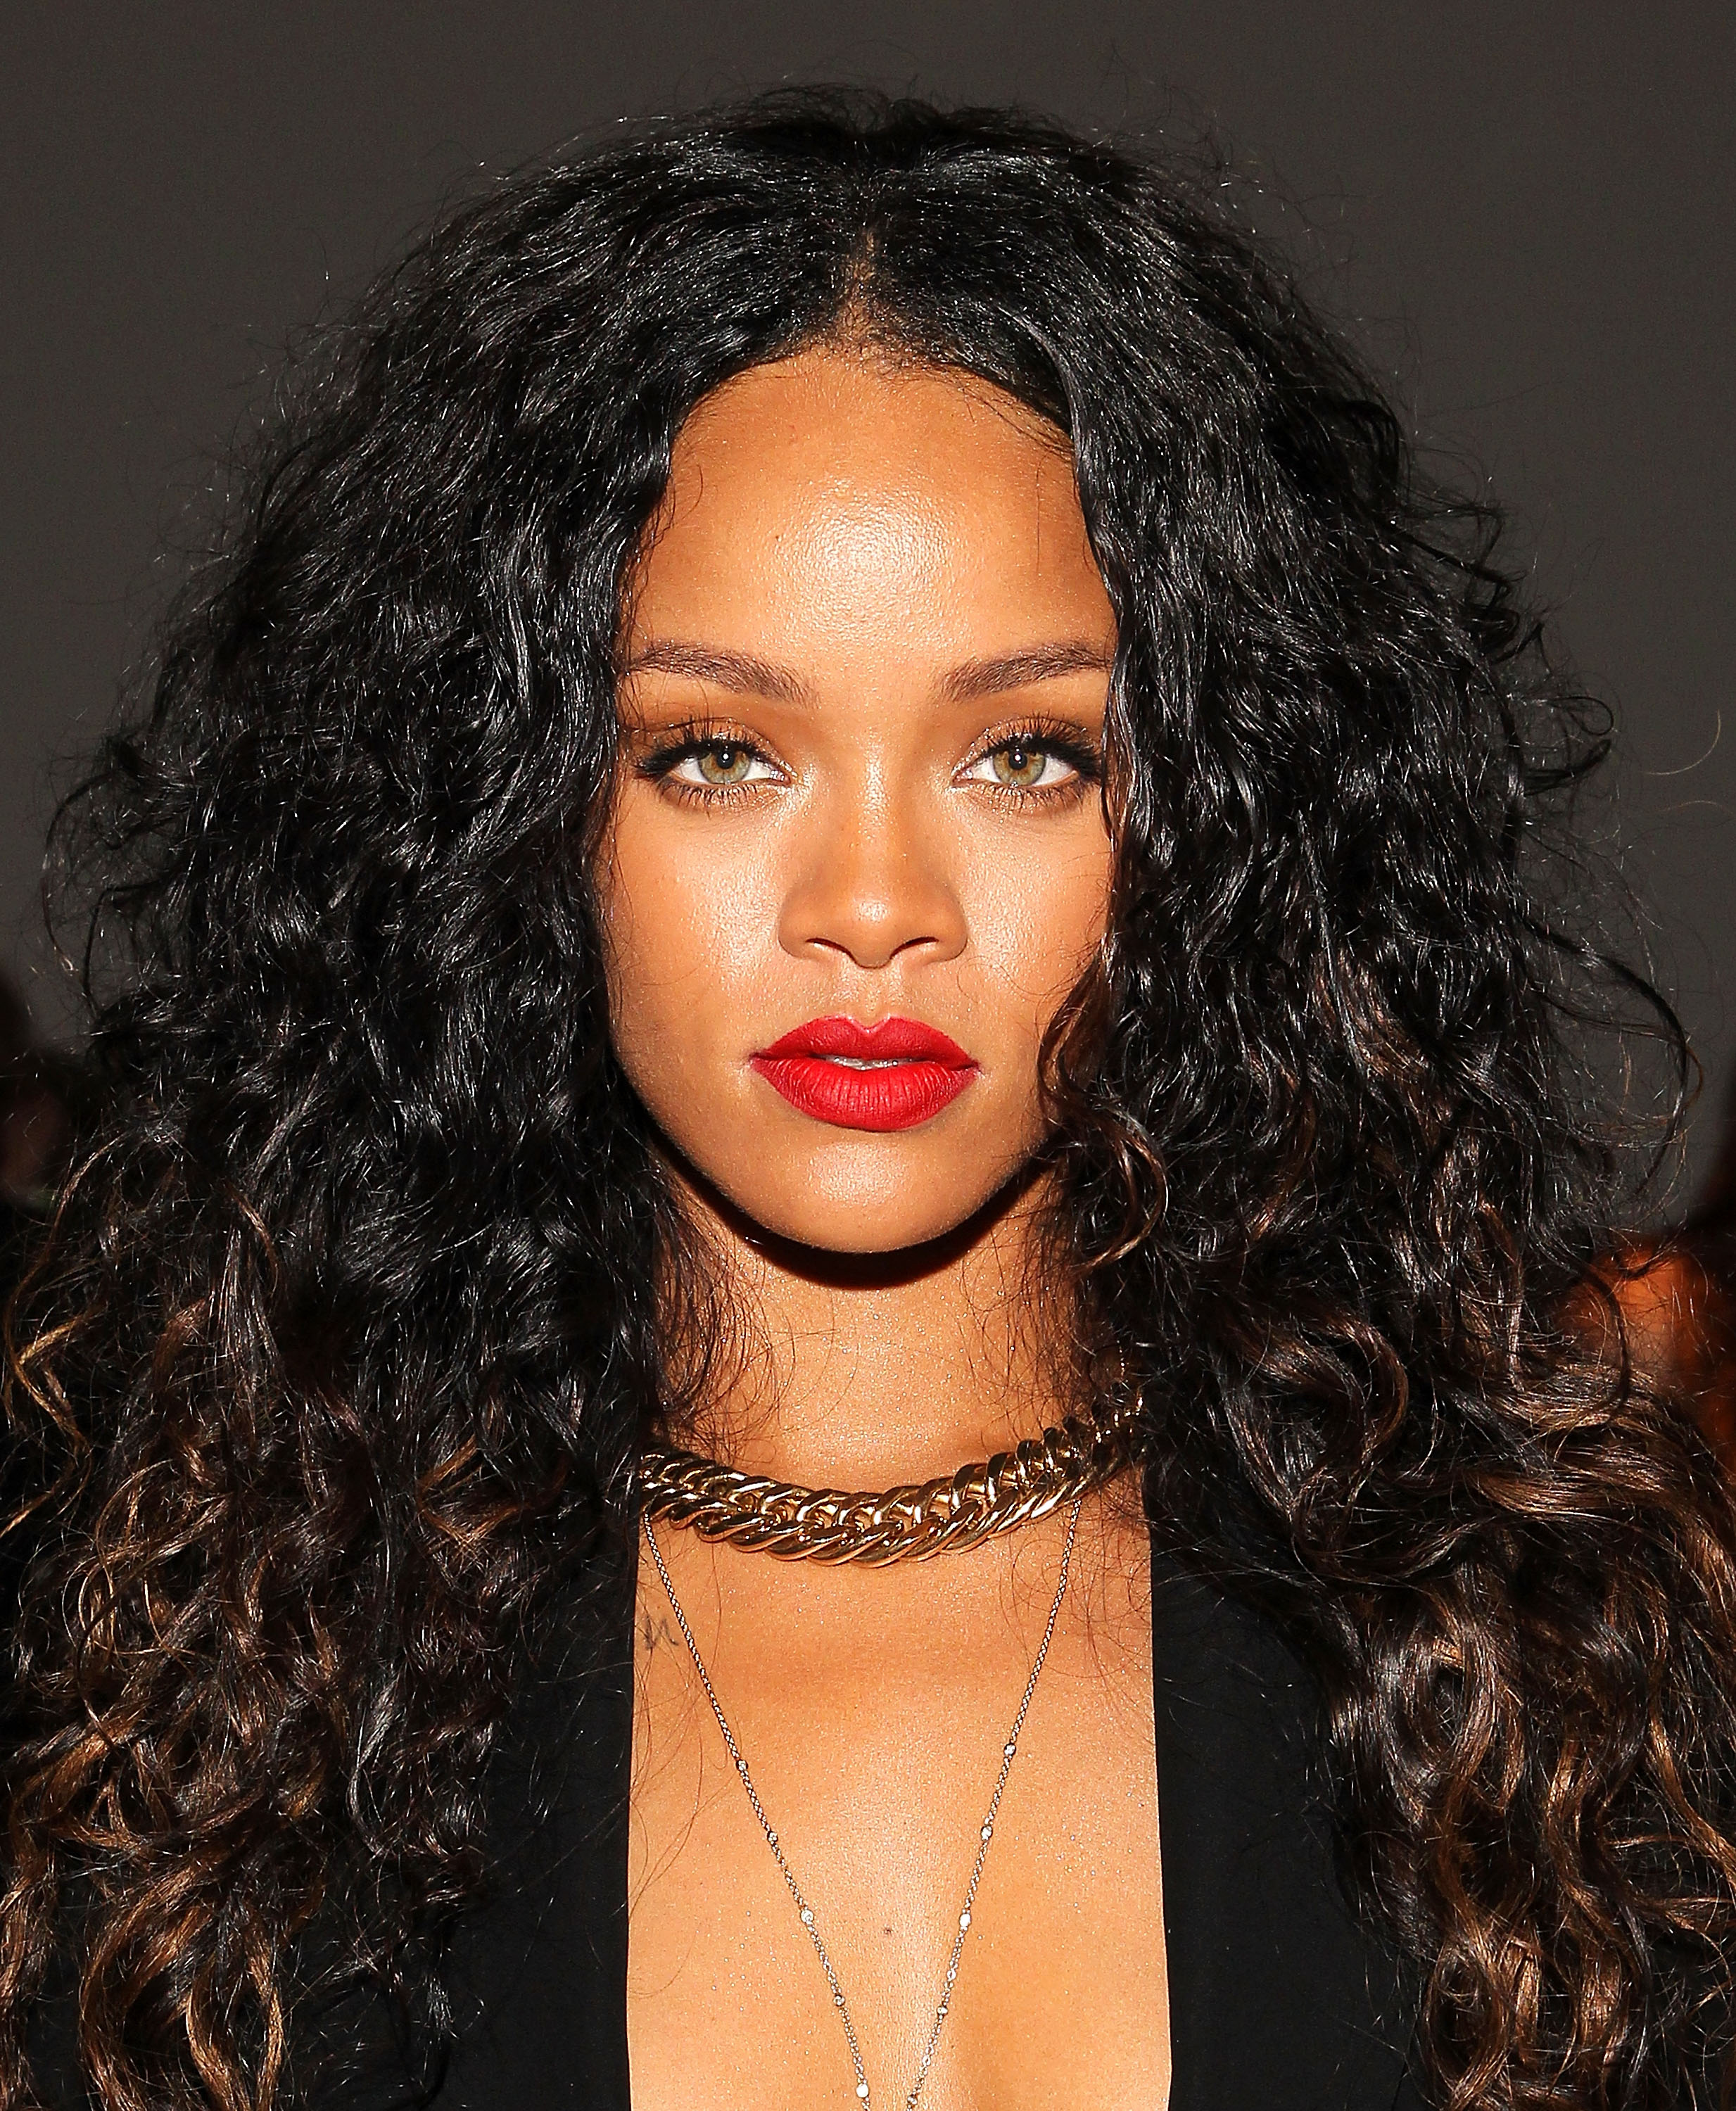 Rihanna attends the Altuzarra show during Mercedes-Benz Fashion Week Spring 2015 at Spring Studios on September 6, 2014 in New York City. (Paul Morigi—WireImage)